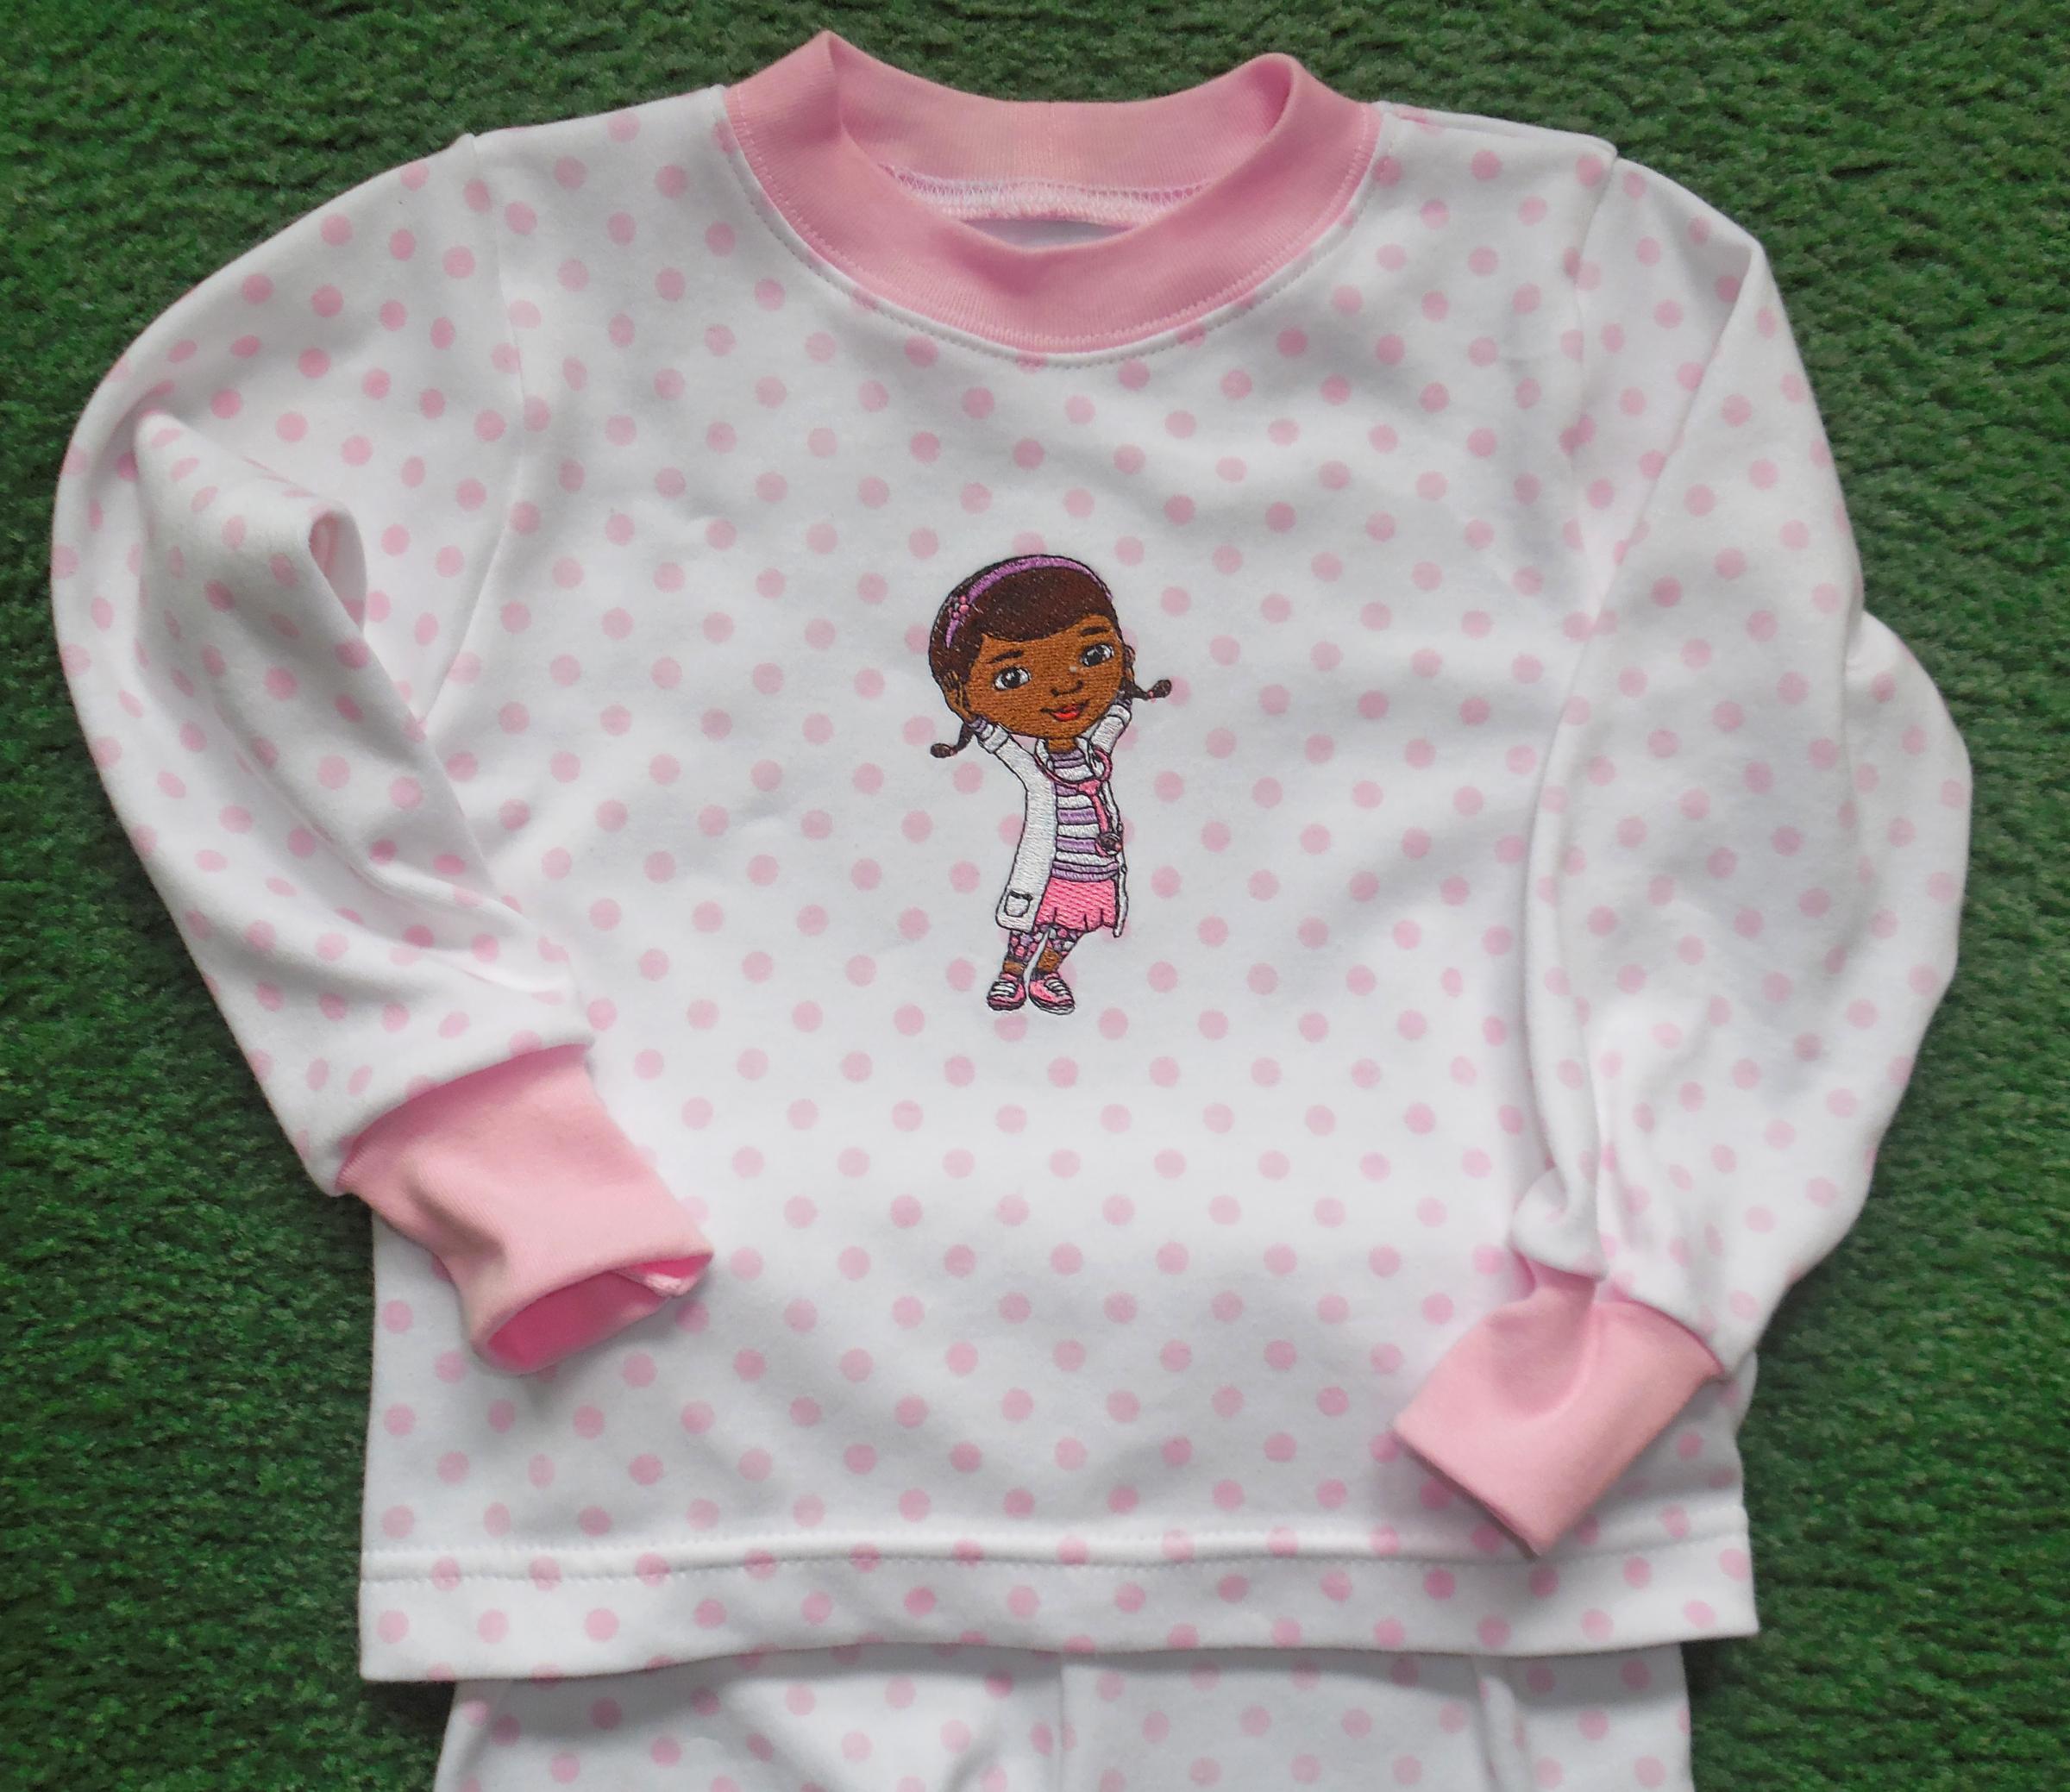 Kids pajamas with Dottie McStuffins aka Dottoressa embroidery design